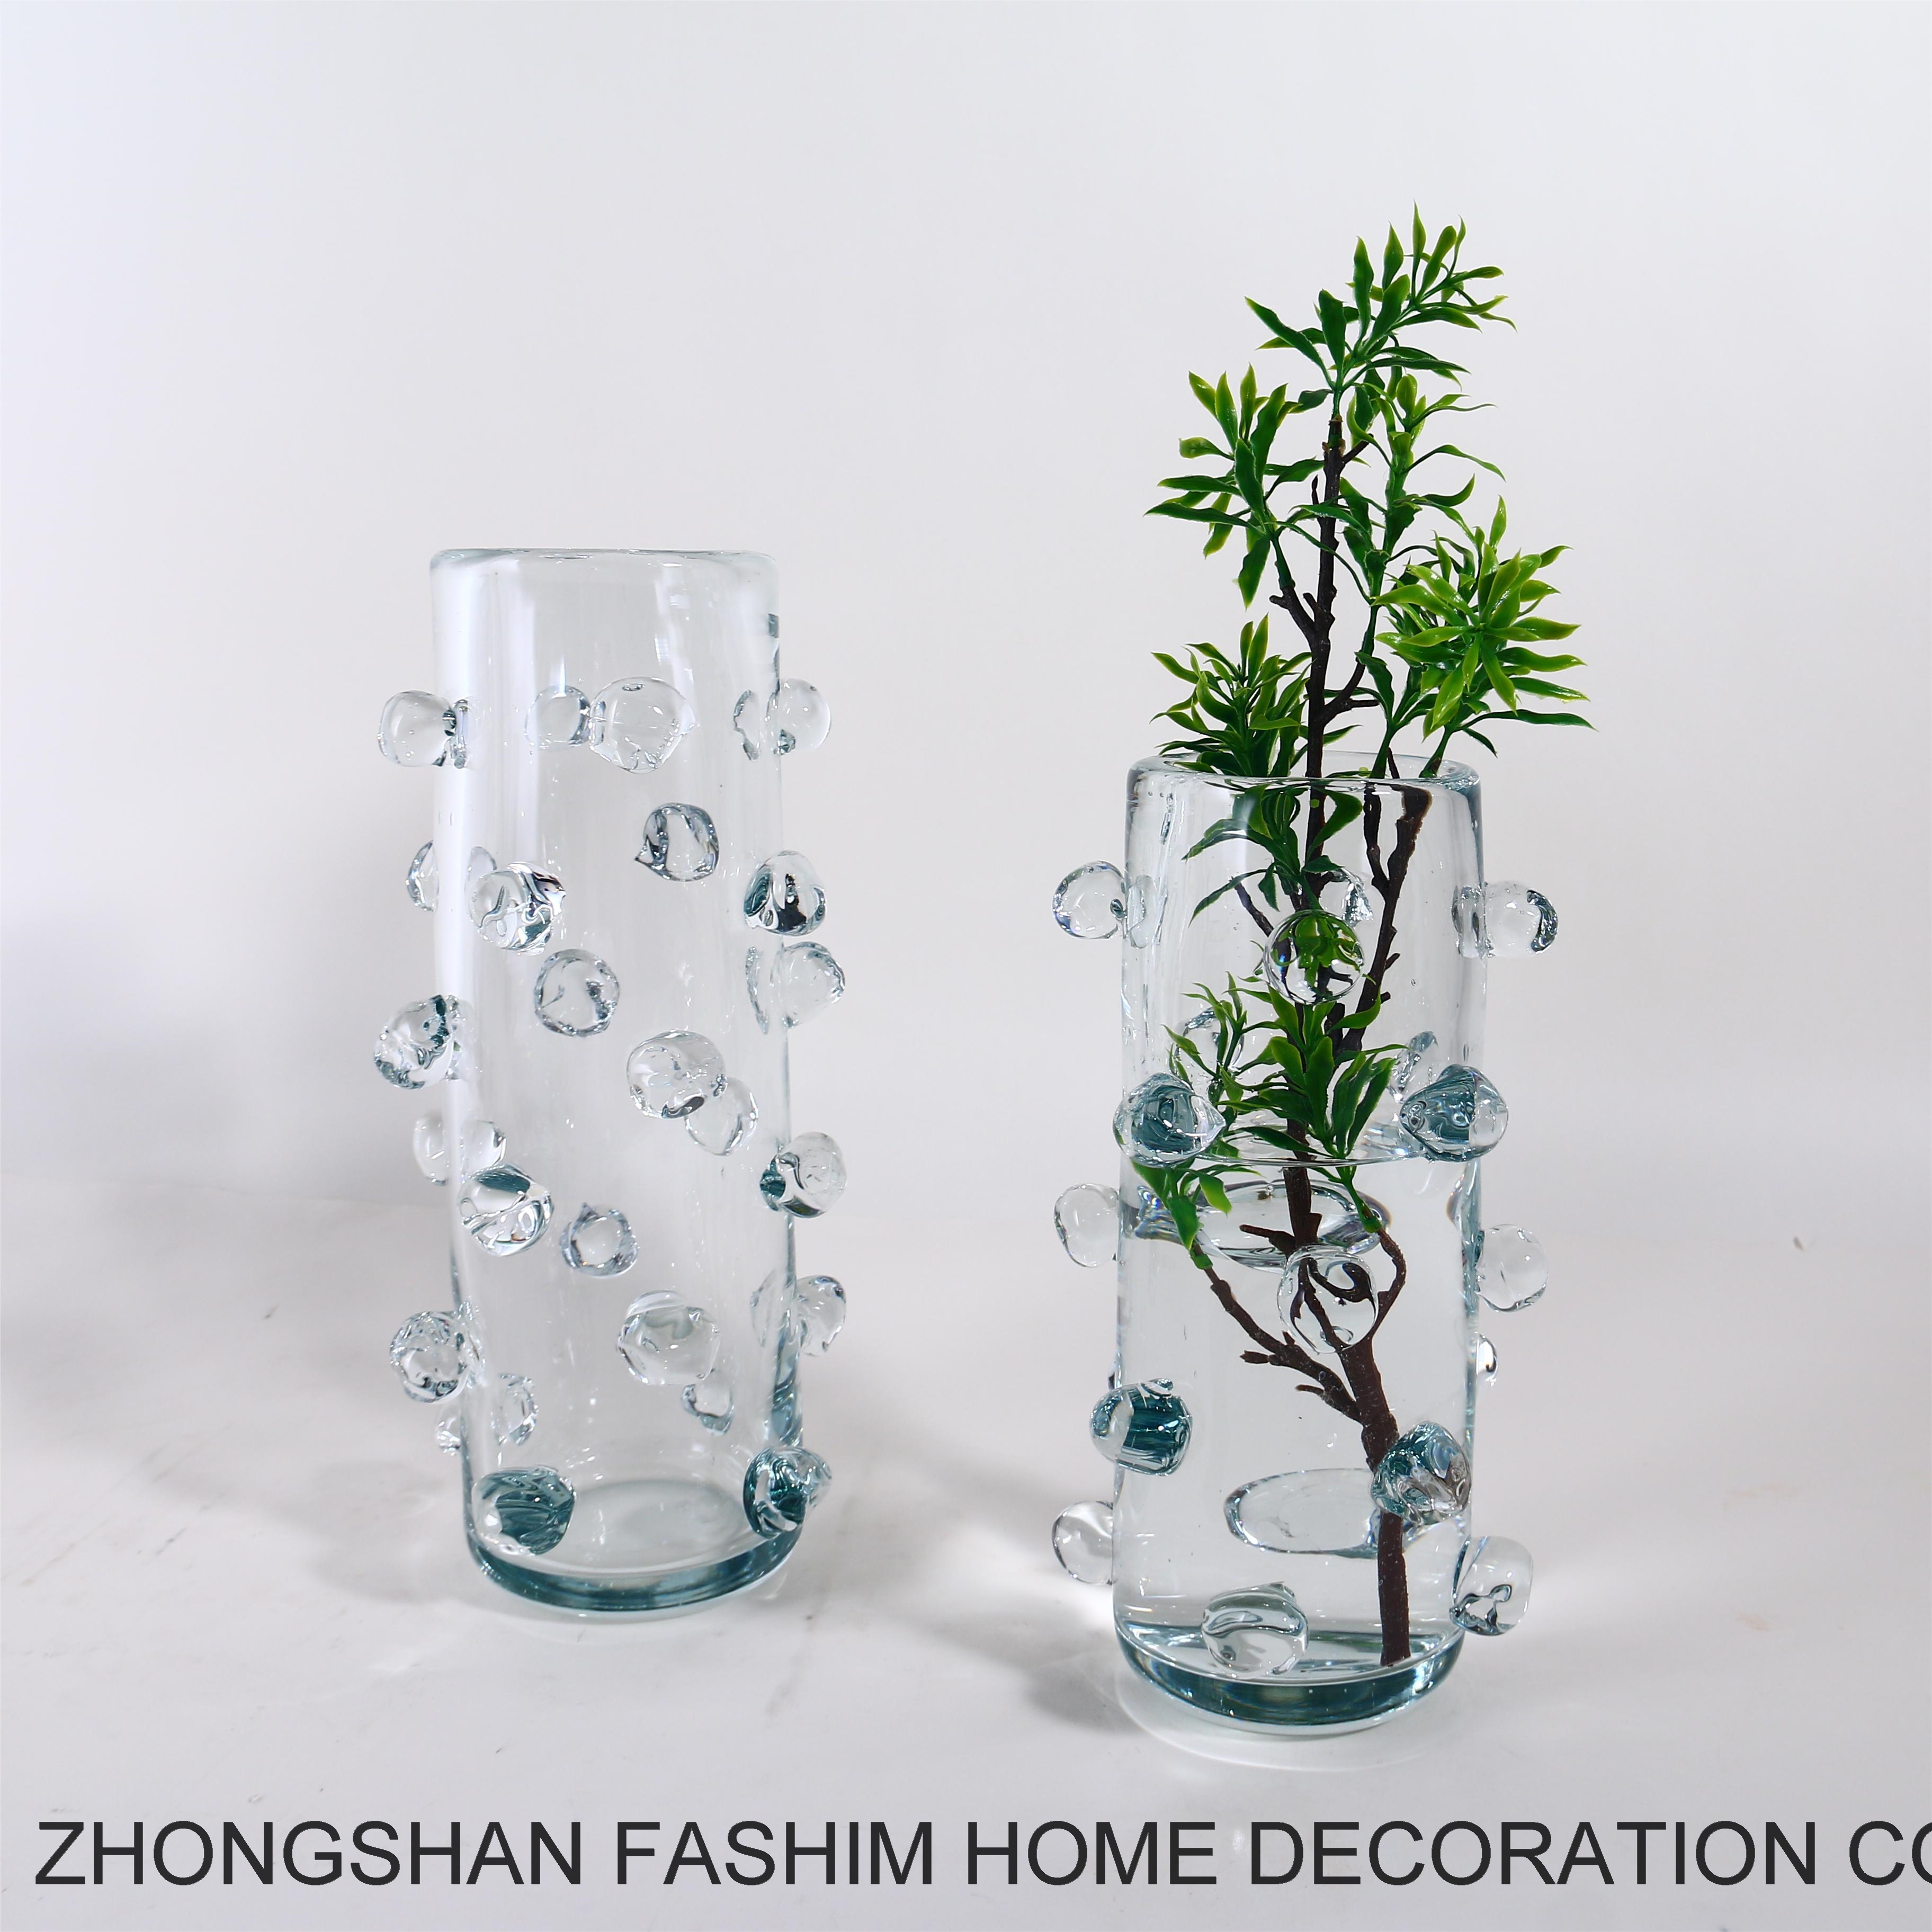 Fashimdecor?metal?frame?interior?decorative?glass?vase